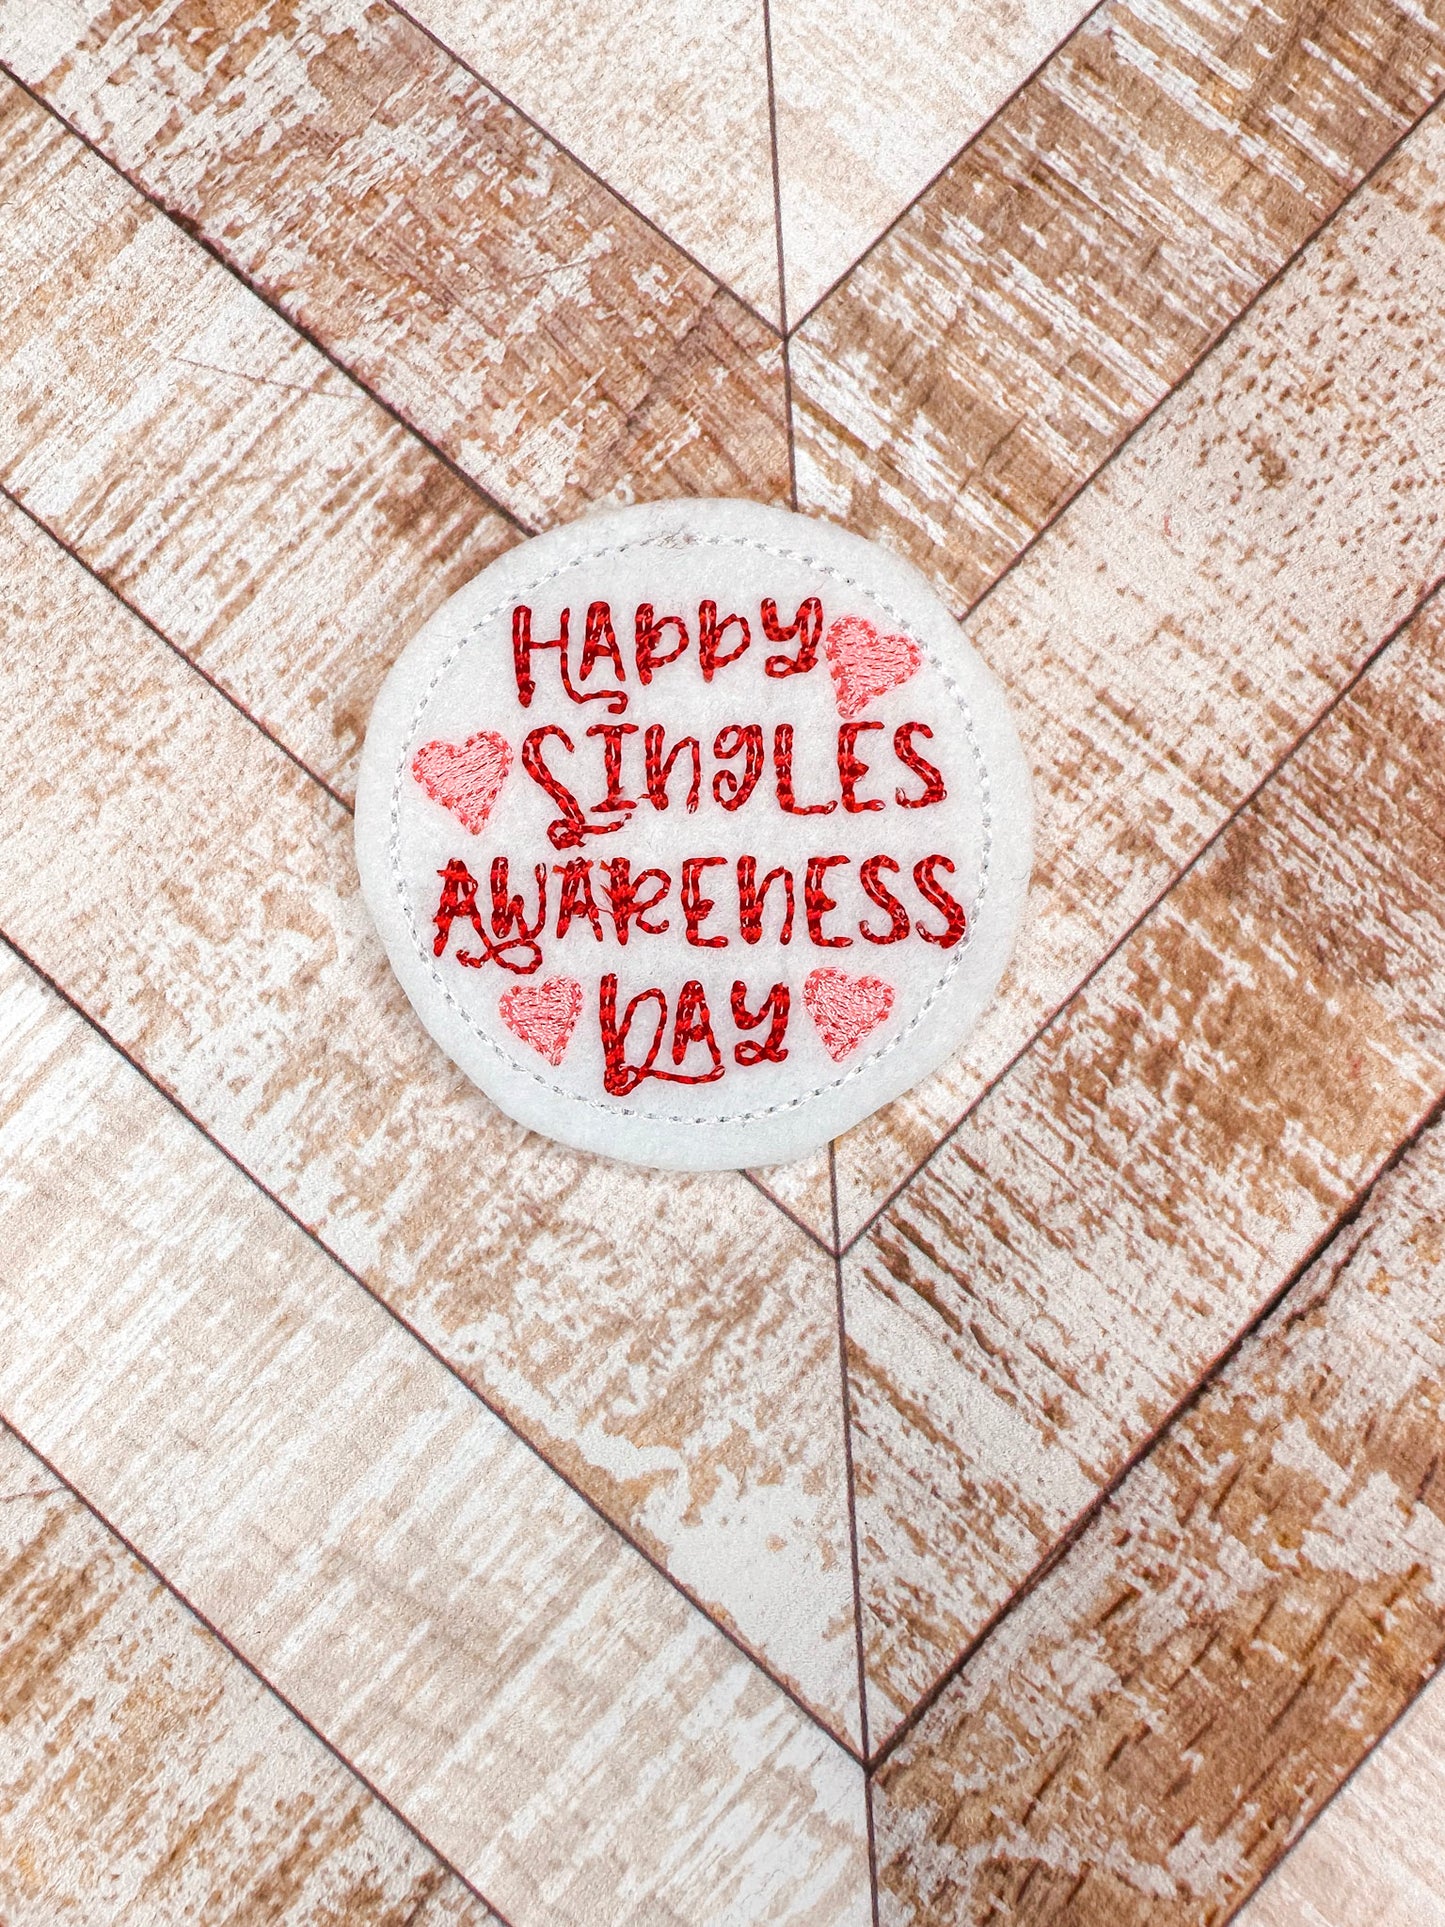 Singles Awareness Day Feltie